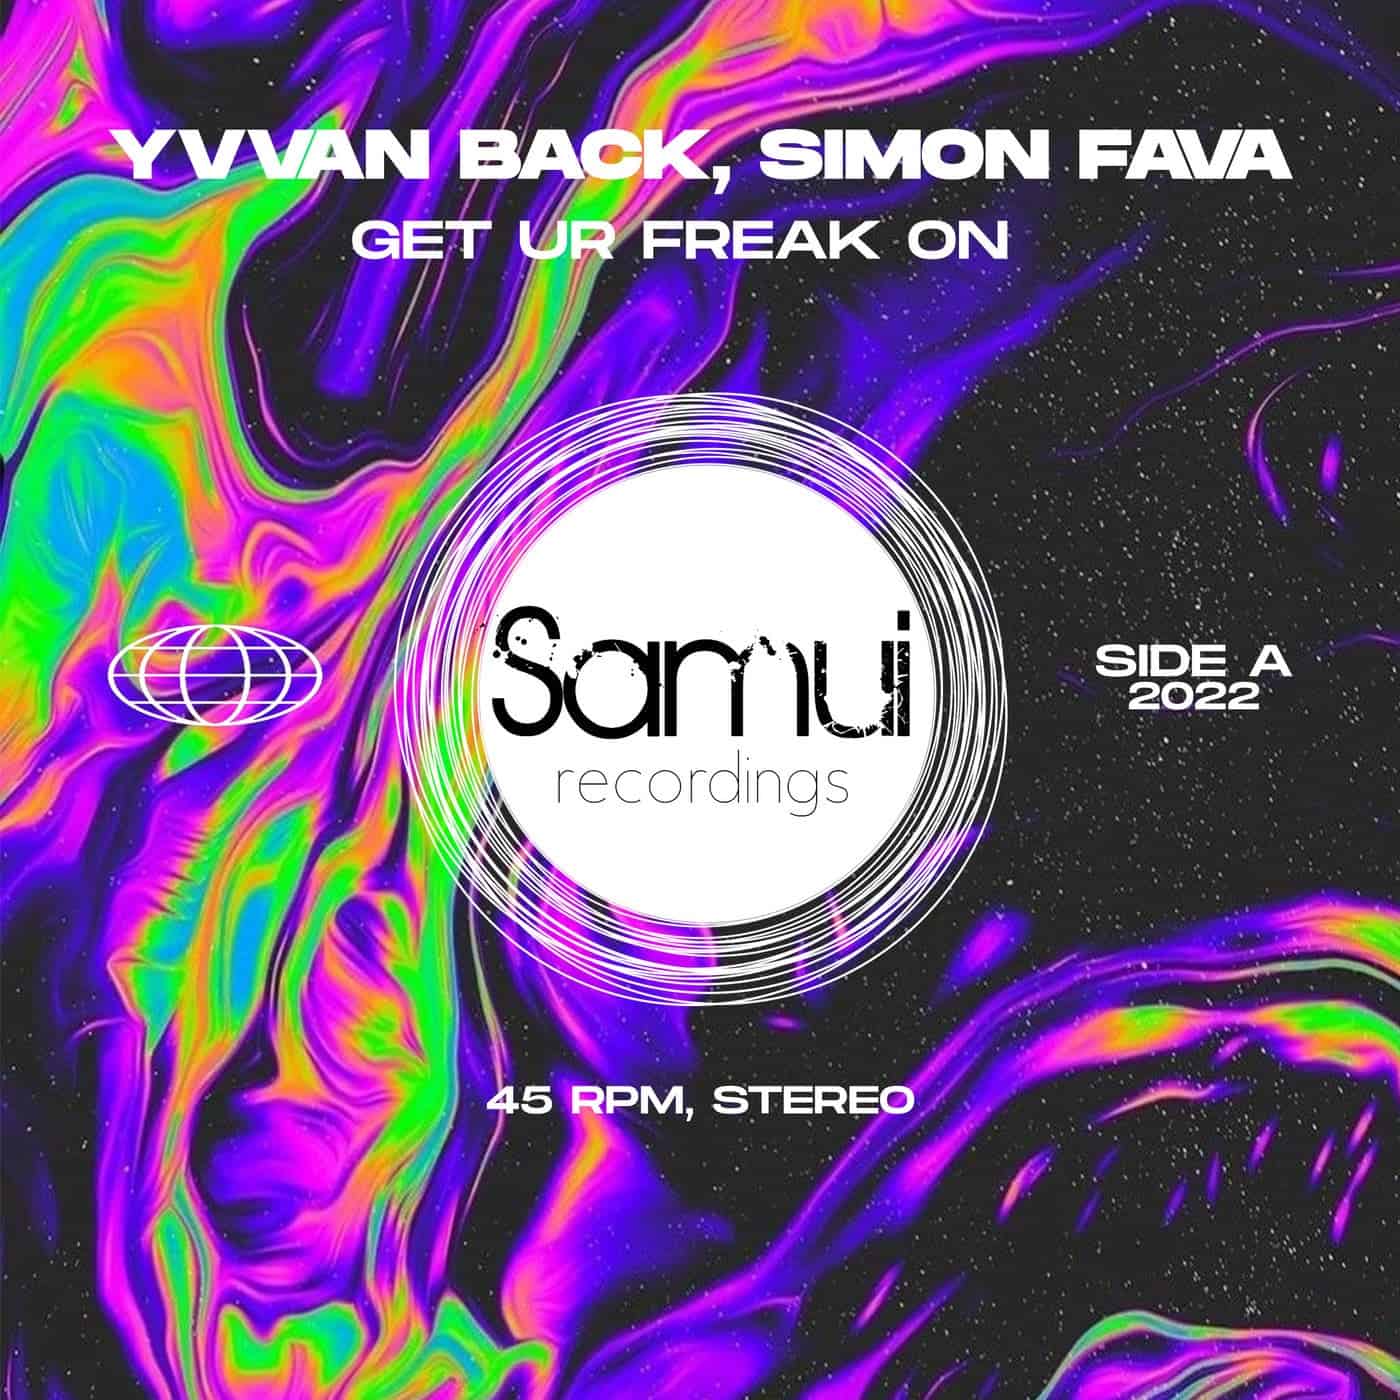 Download Simon Fava, Yvvan Back - Get Ur Freak On on Electrobuzz